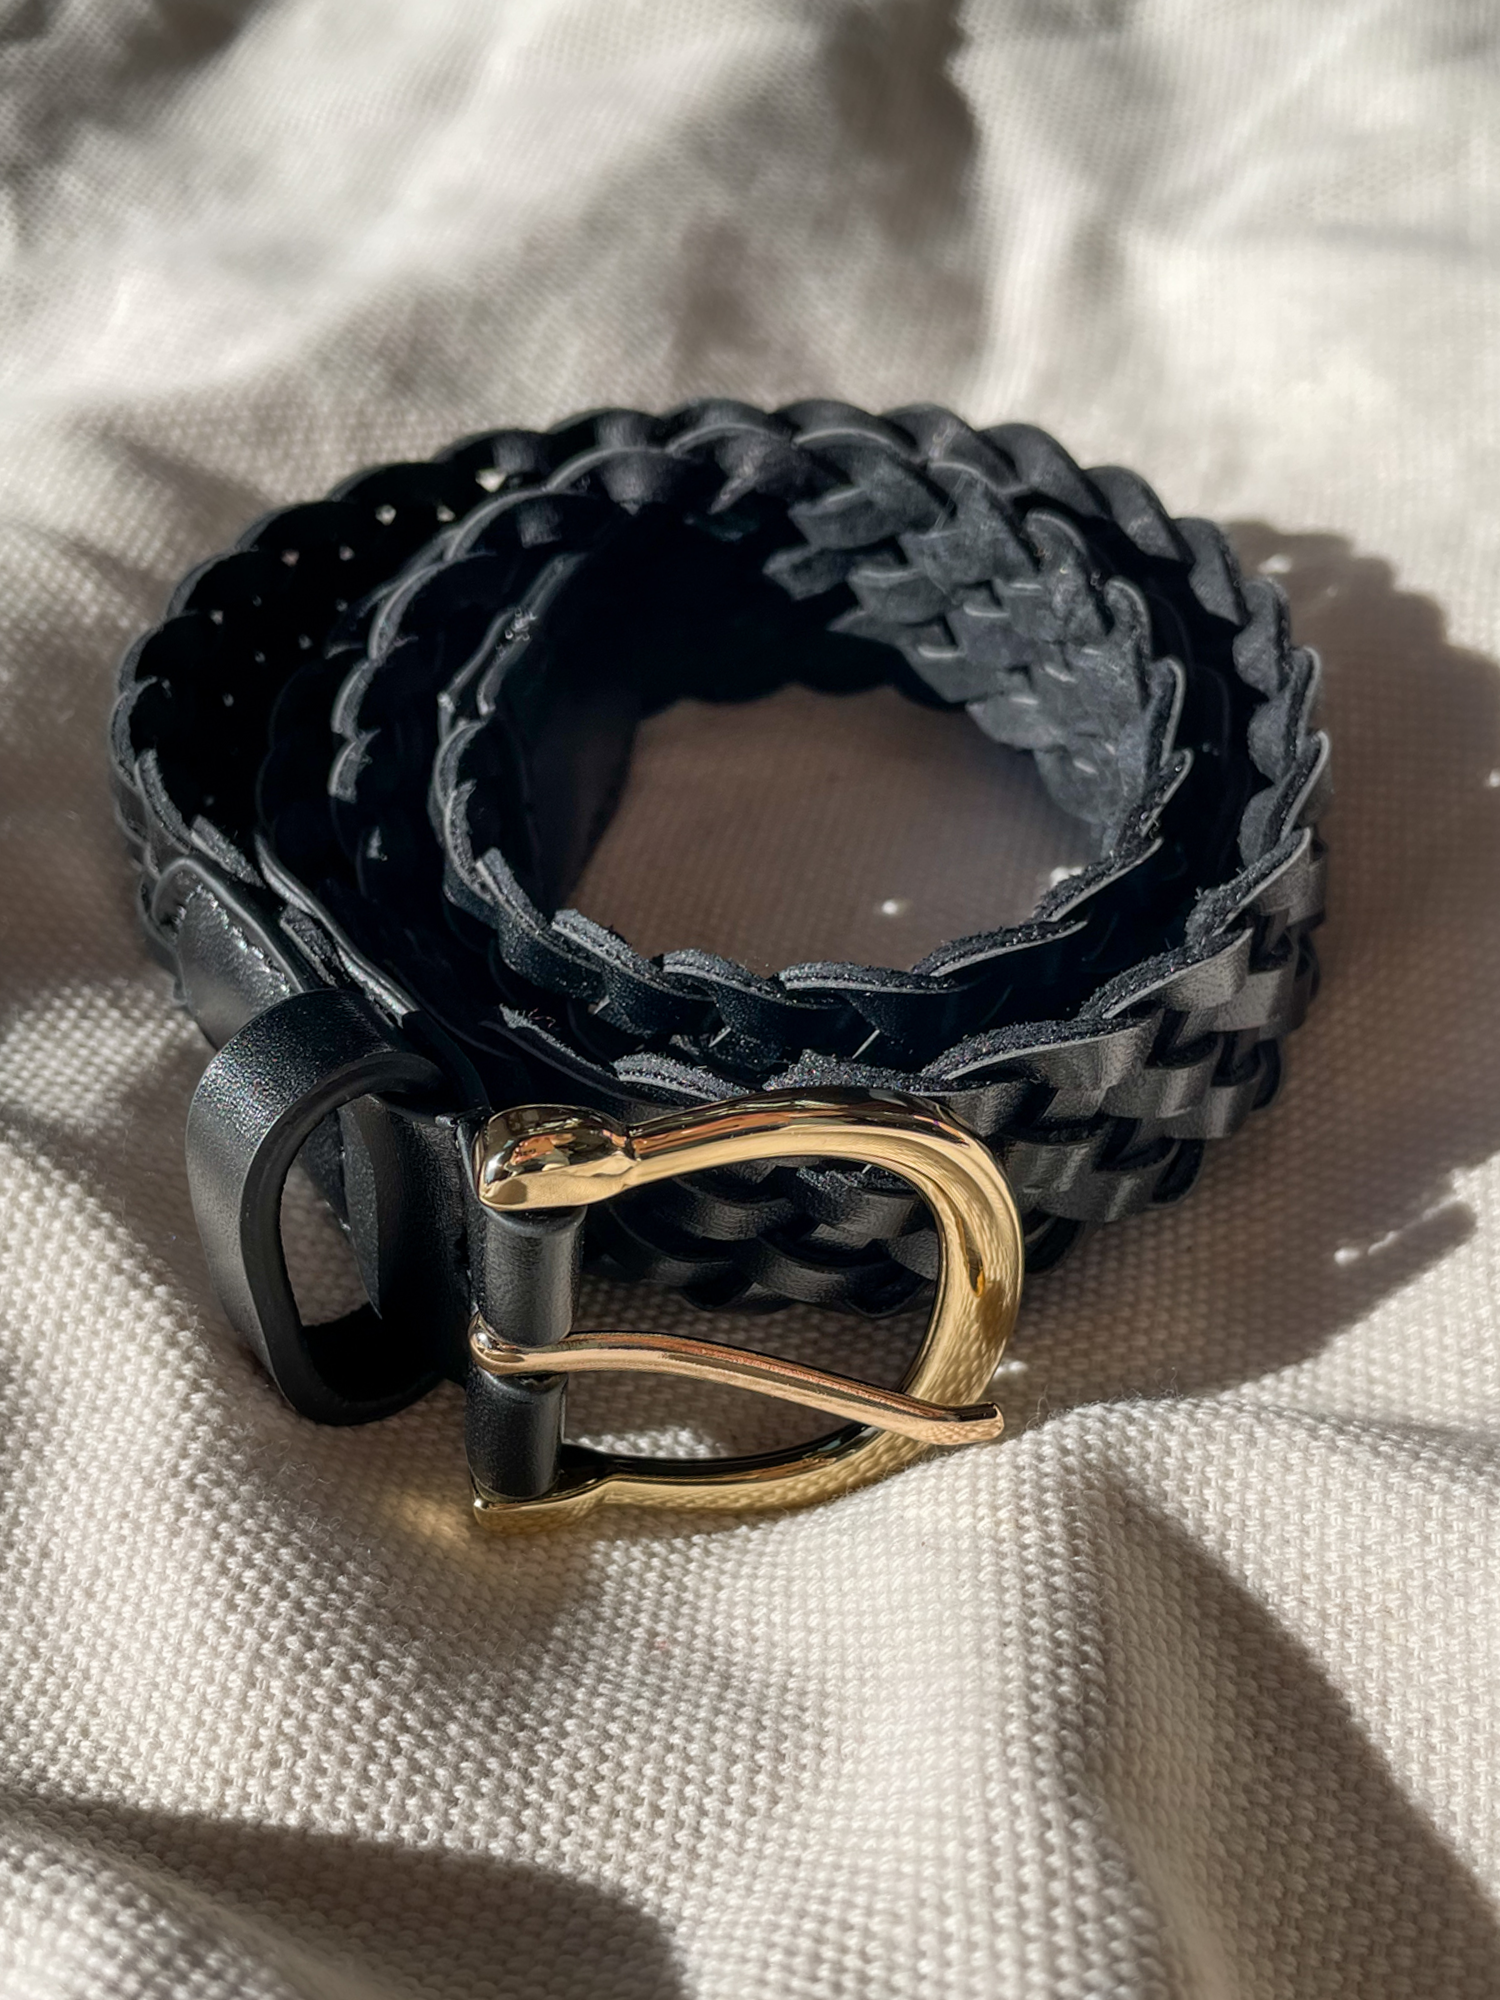 Braided Belt - Black - Collins Clothiers Online Store